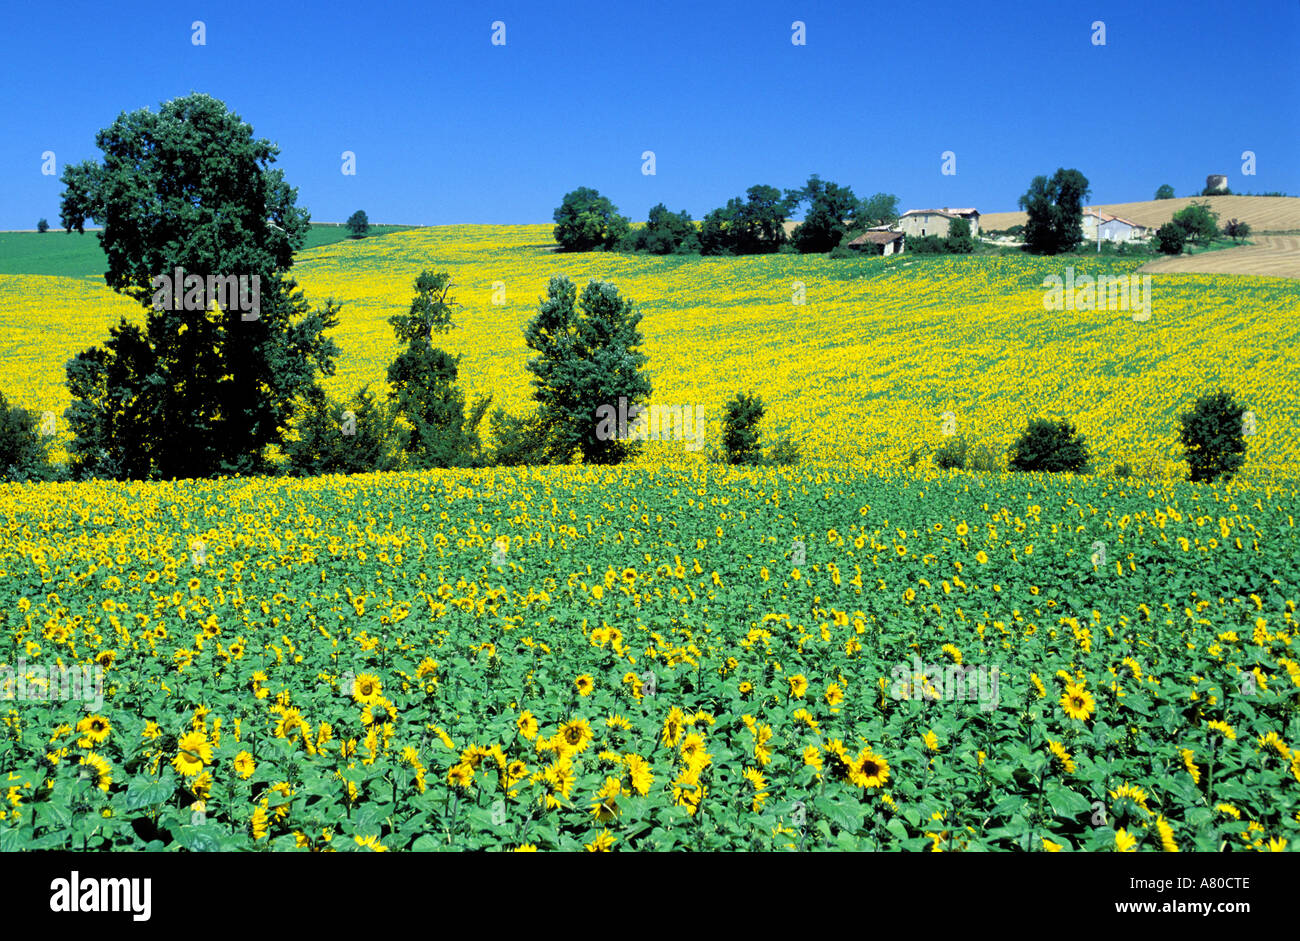 France, Gers, sunflower fields Stock Photo